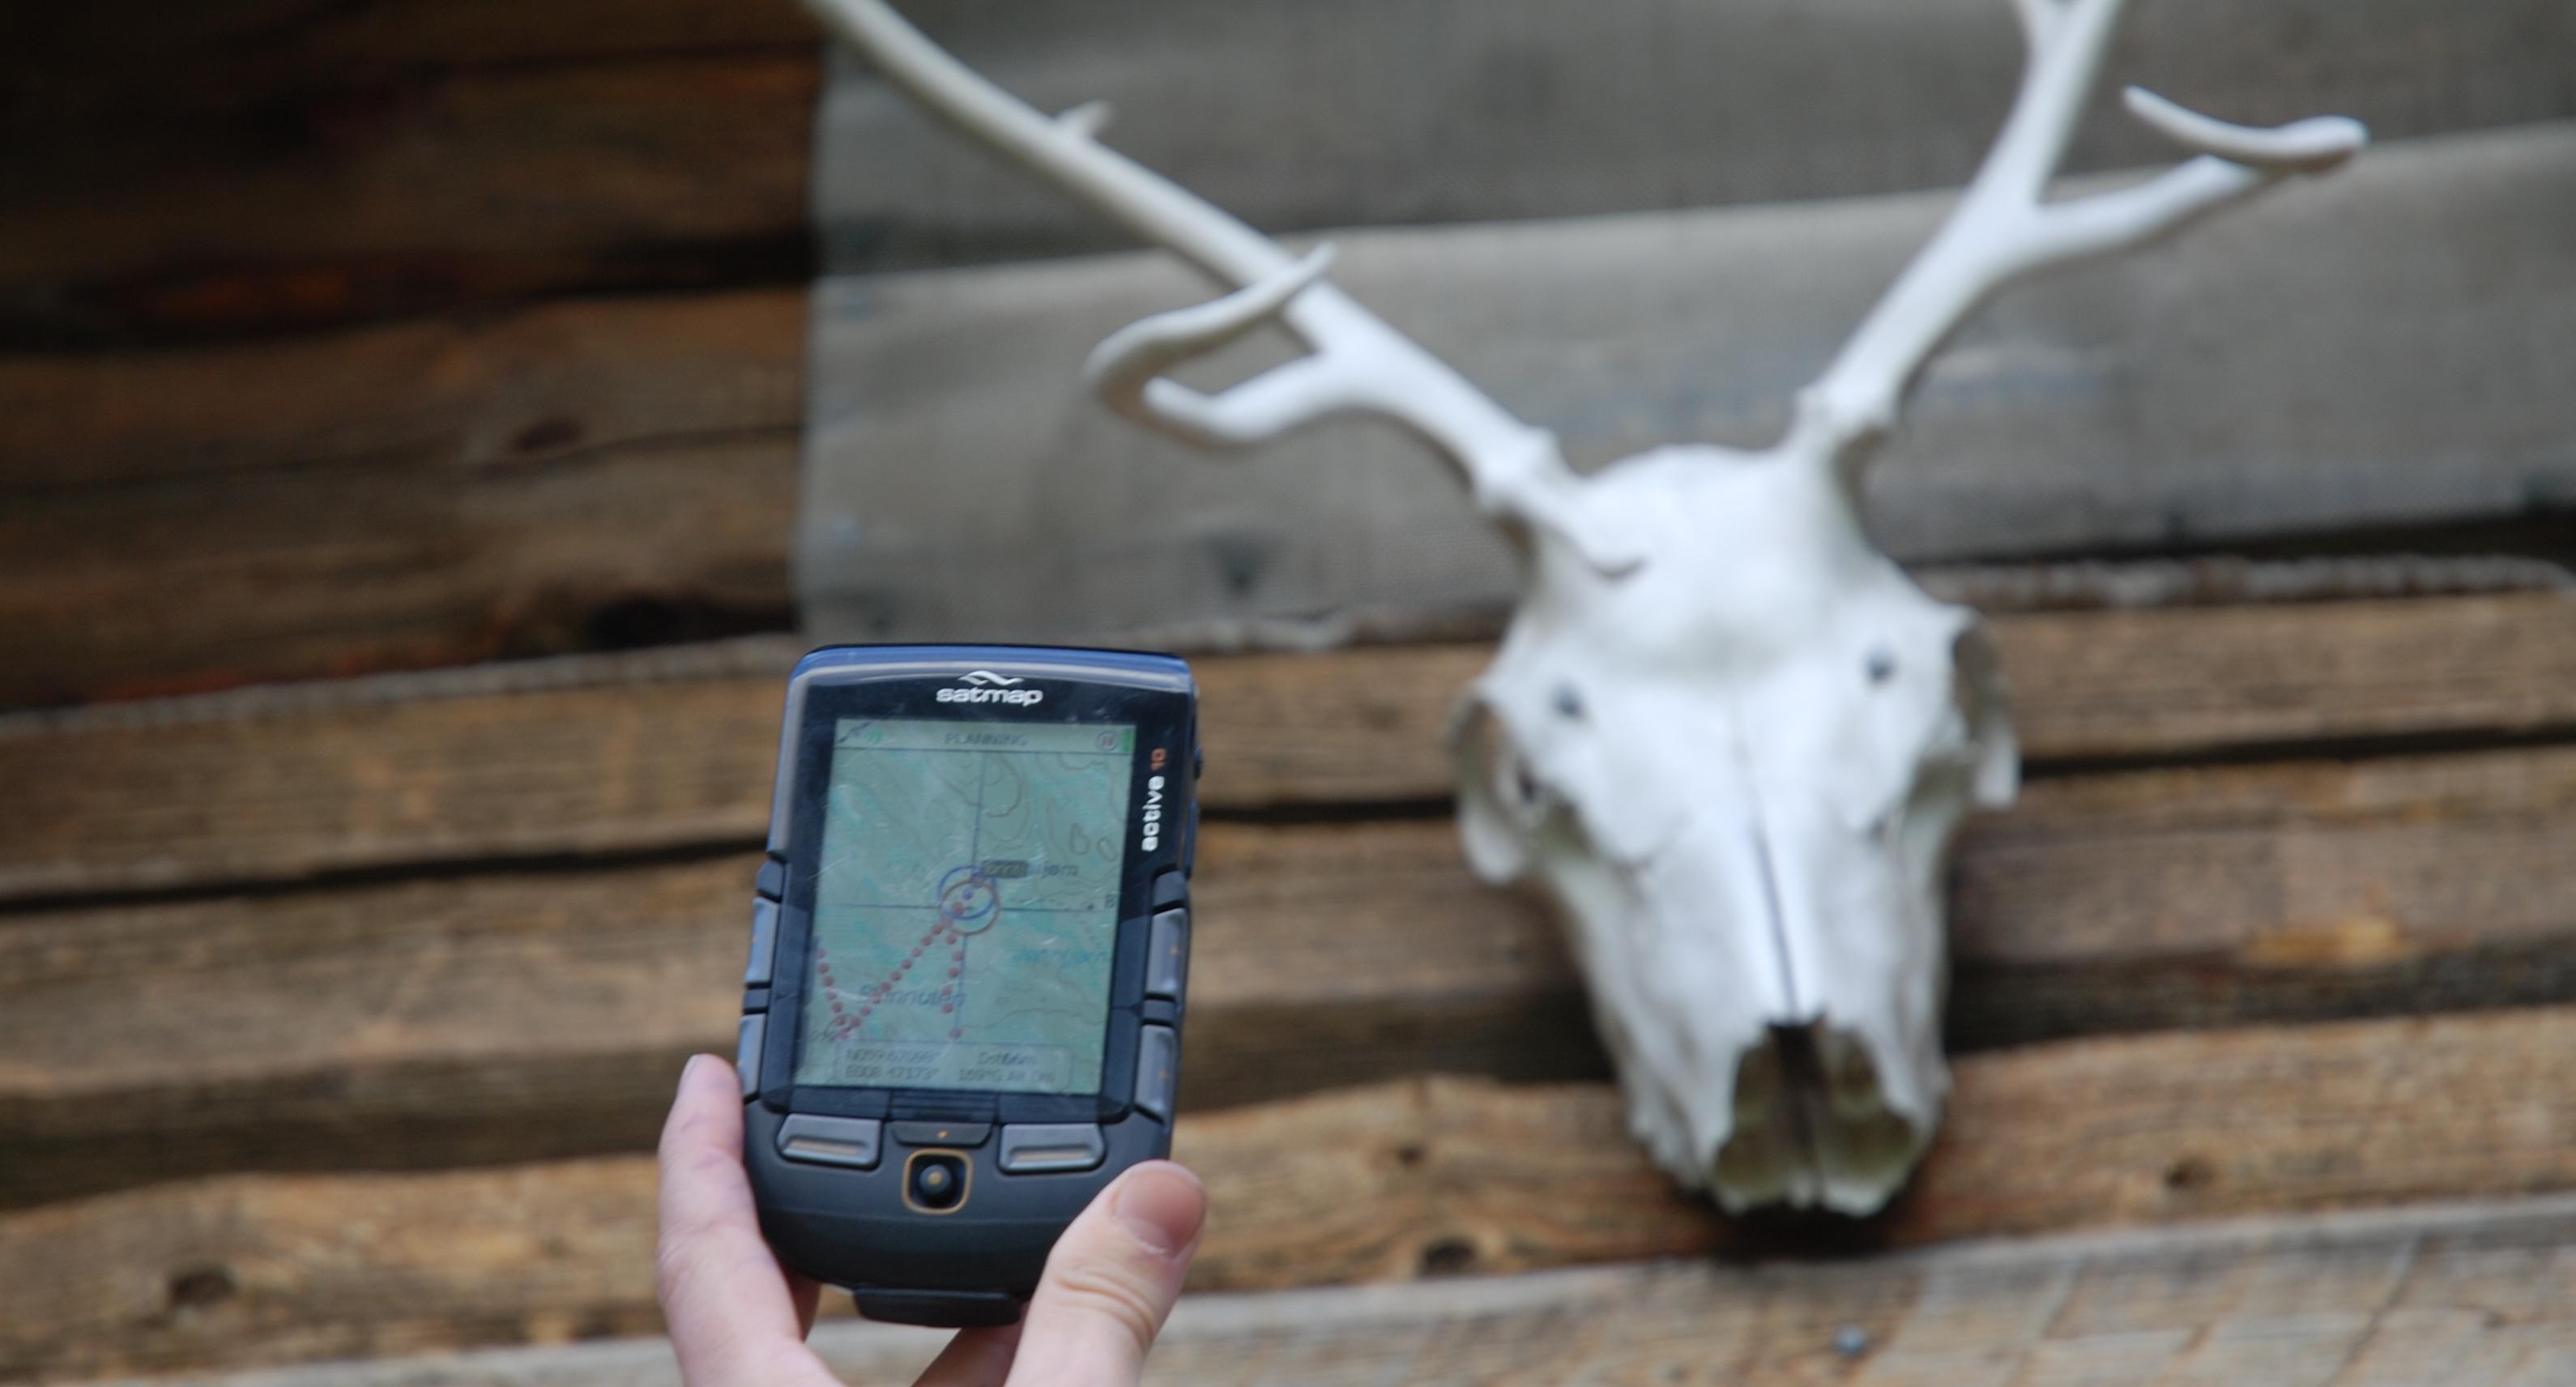 Satmap Active 10 er testens største GPS.